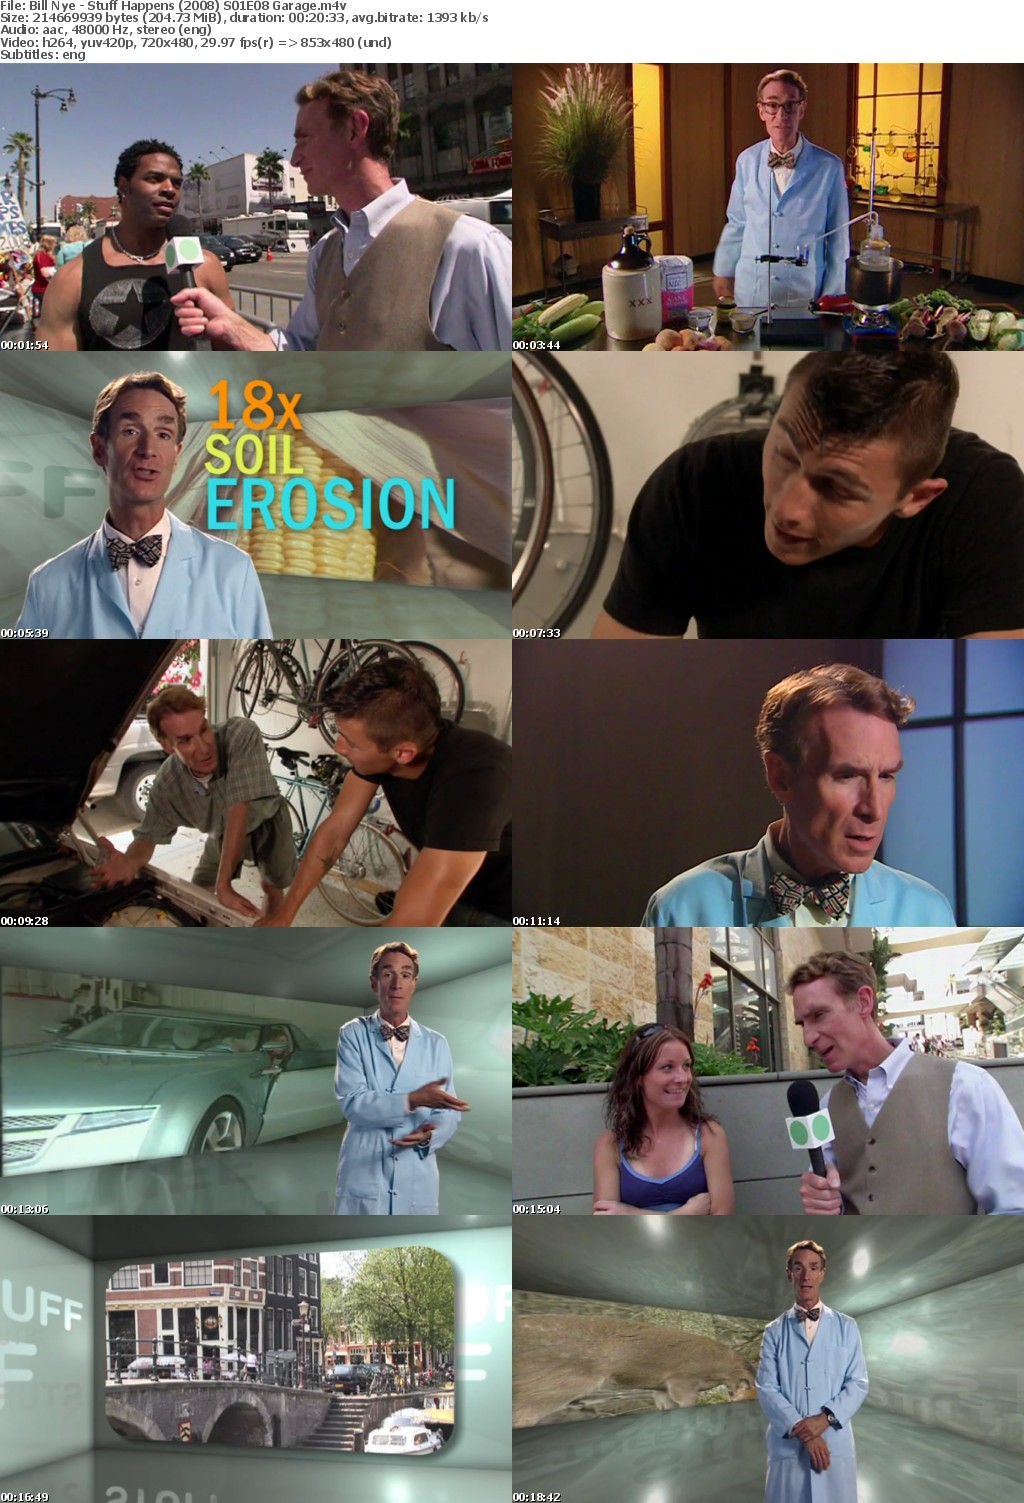 Stuff happens with Bill Nye (2008) DVDrip